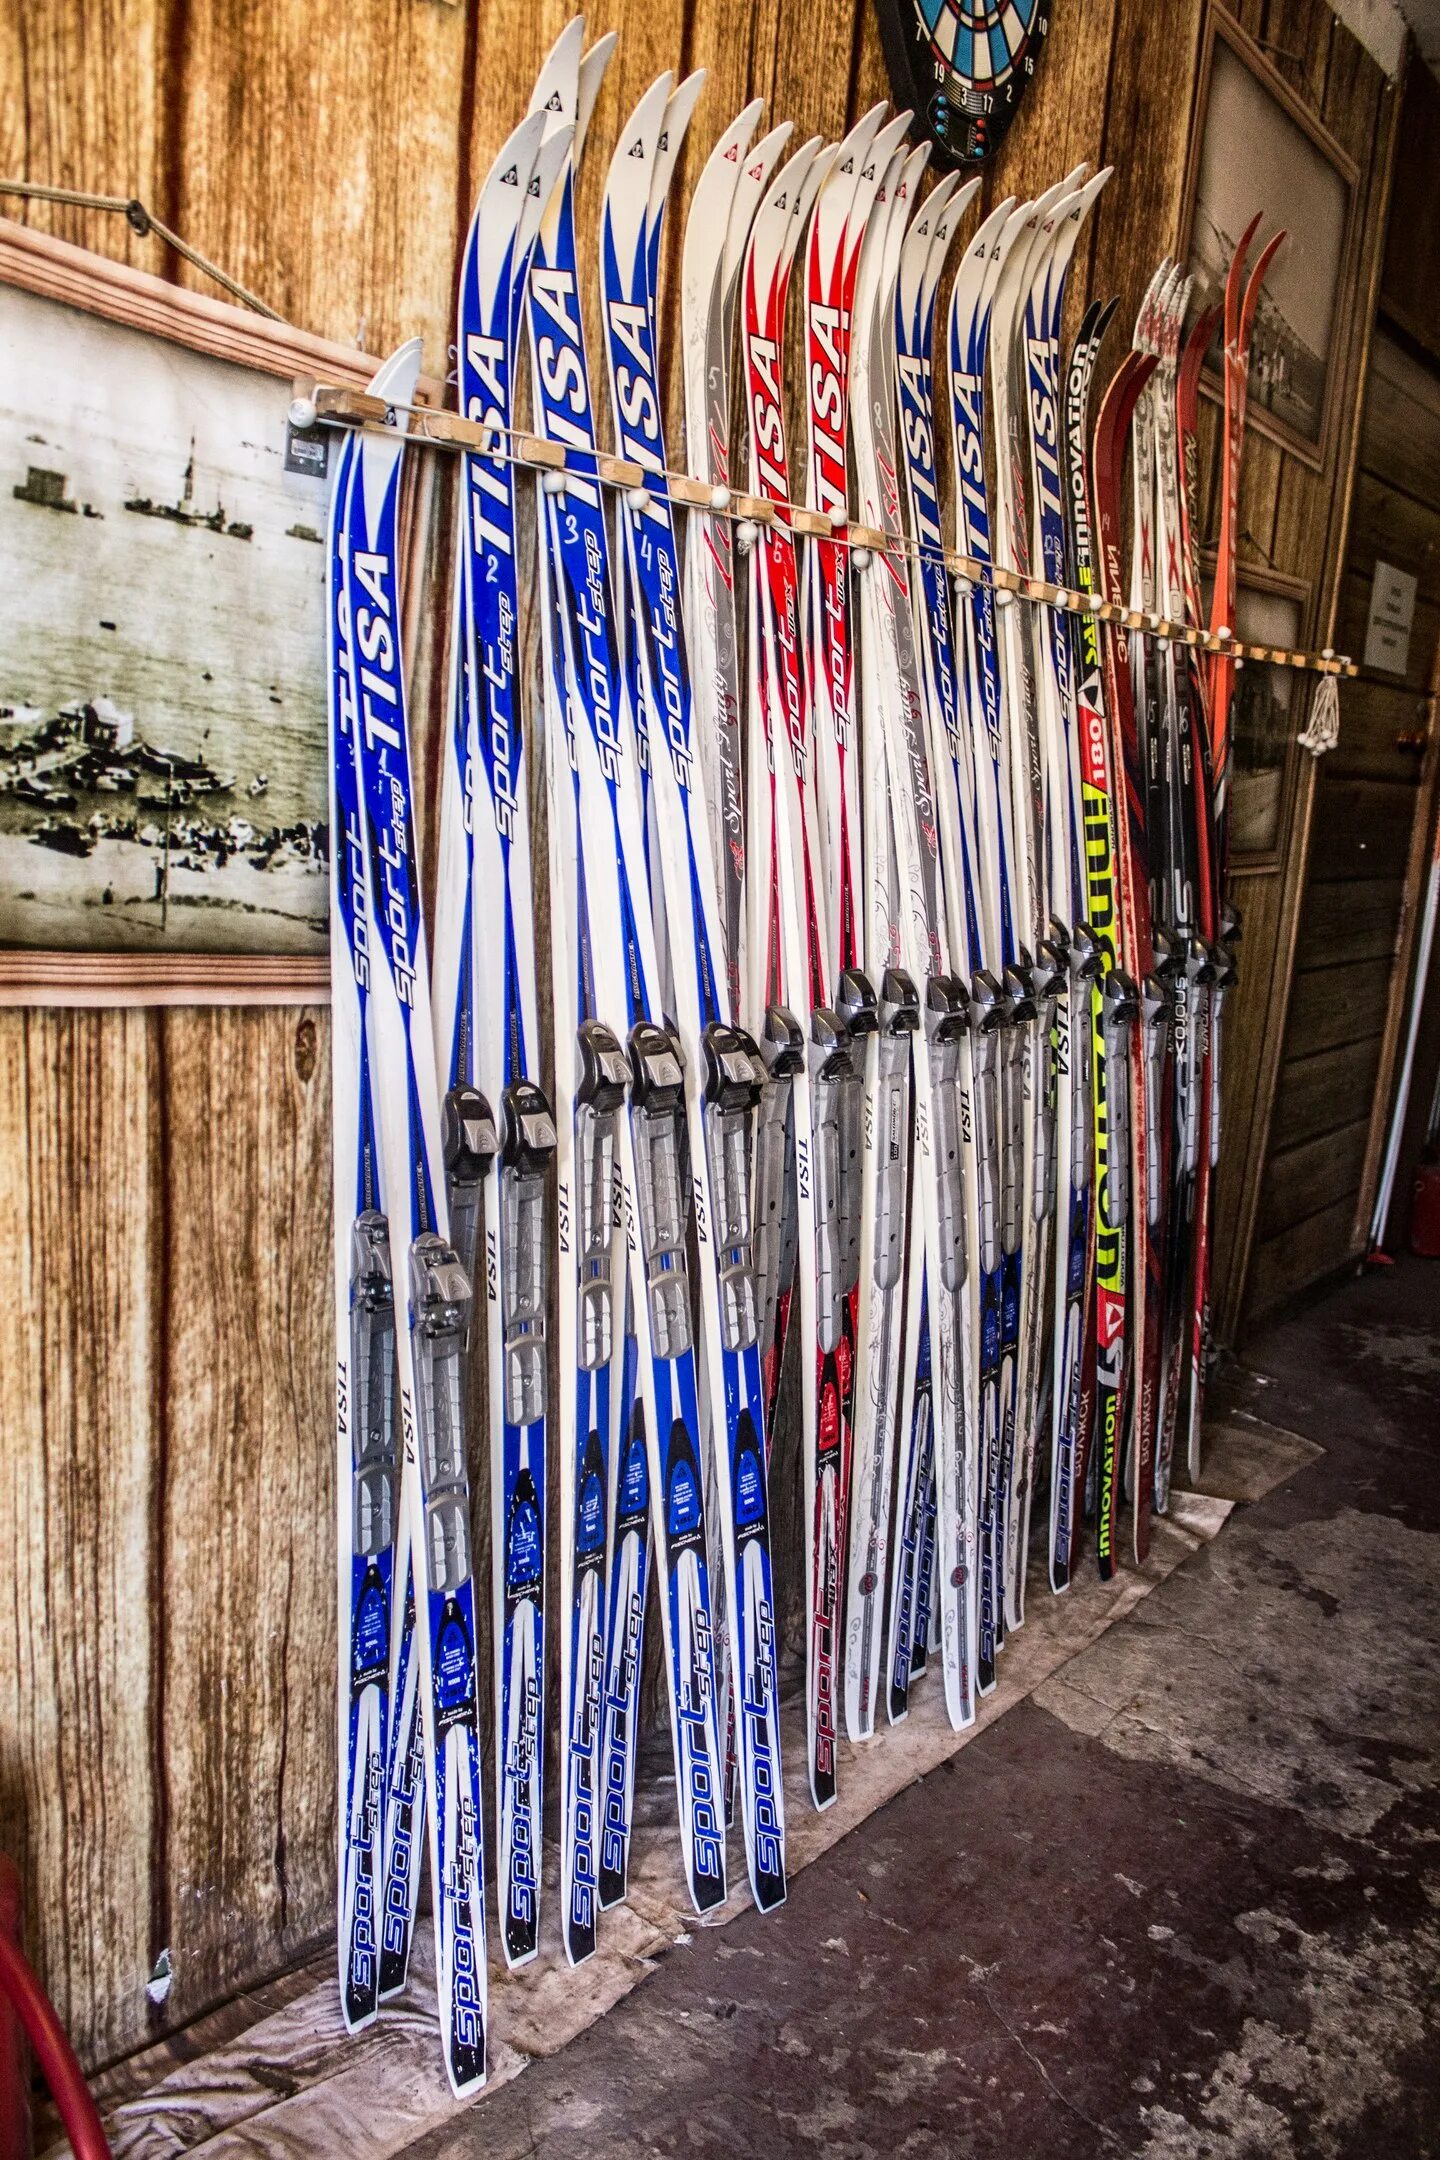 Лыжи напрокат. Аренда лыж. Лыжи стоят в углу. Лыжи напрокат в Москве. Взять лыжи в прокат